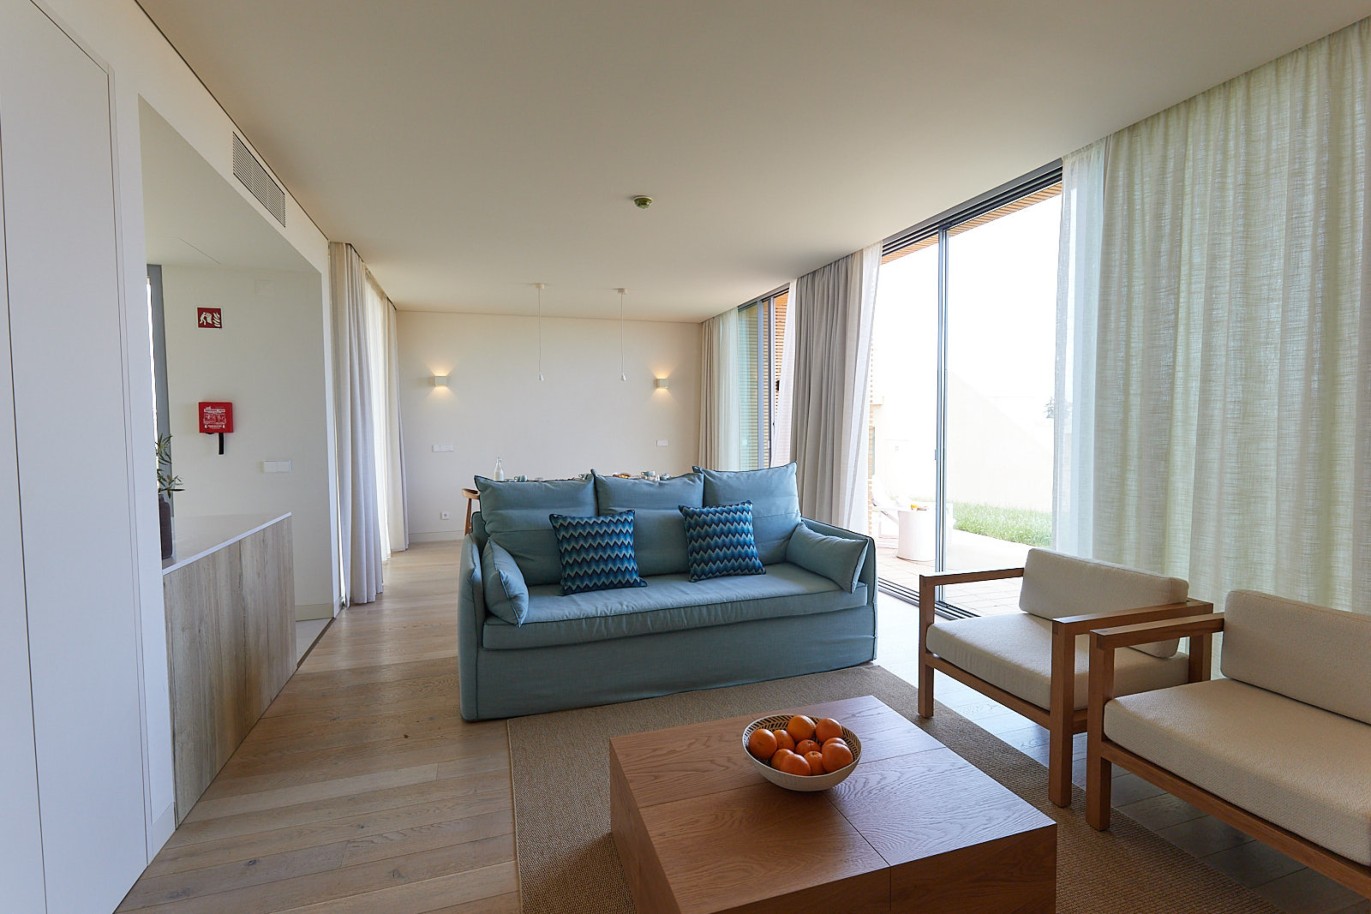 2 bedroom apartment in resort, for sale in Porches, Algarve_229196